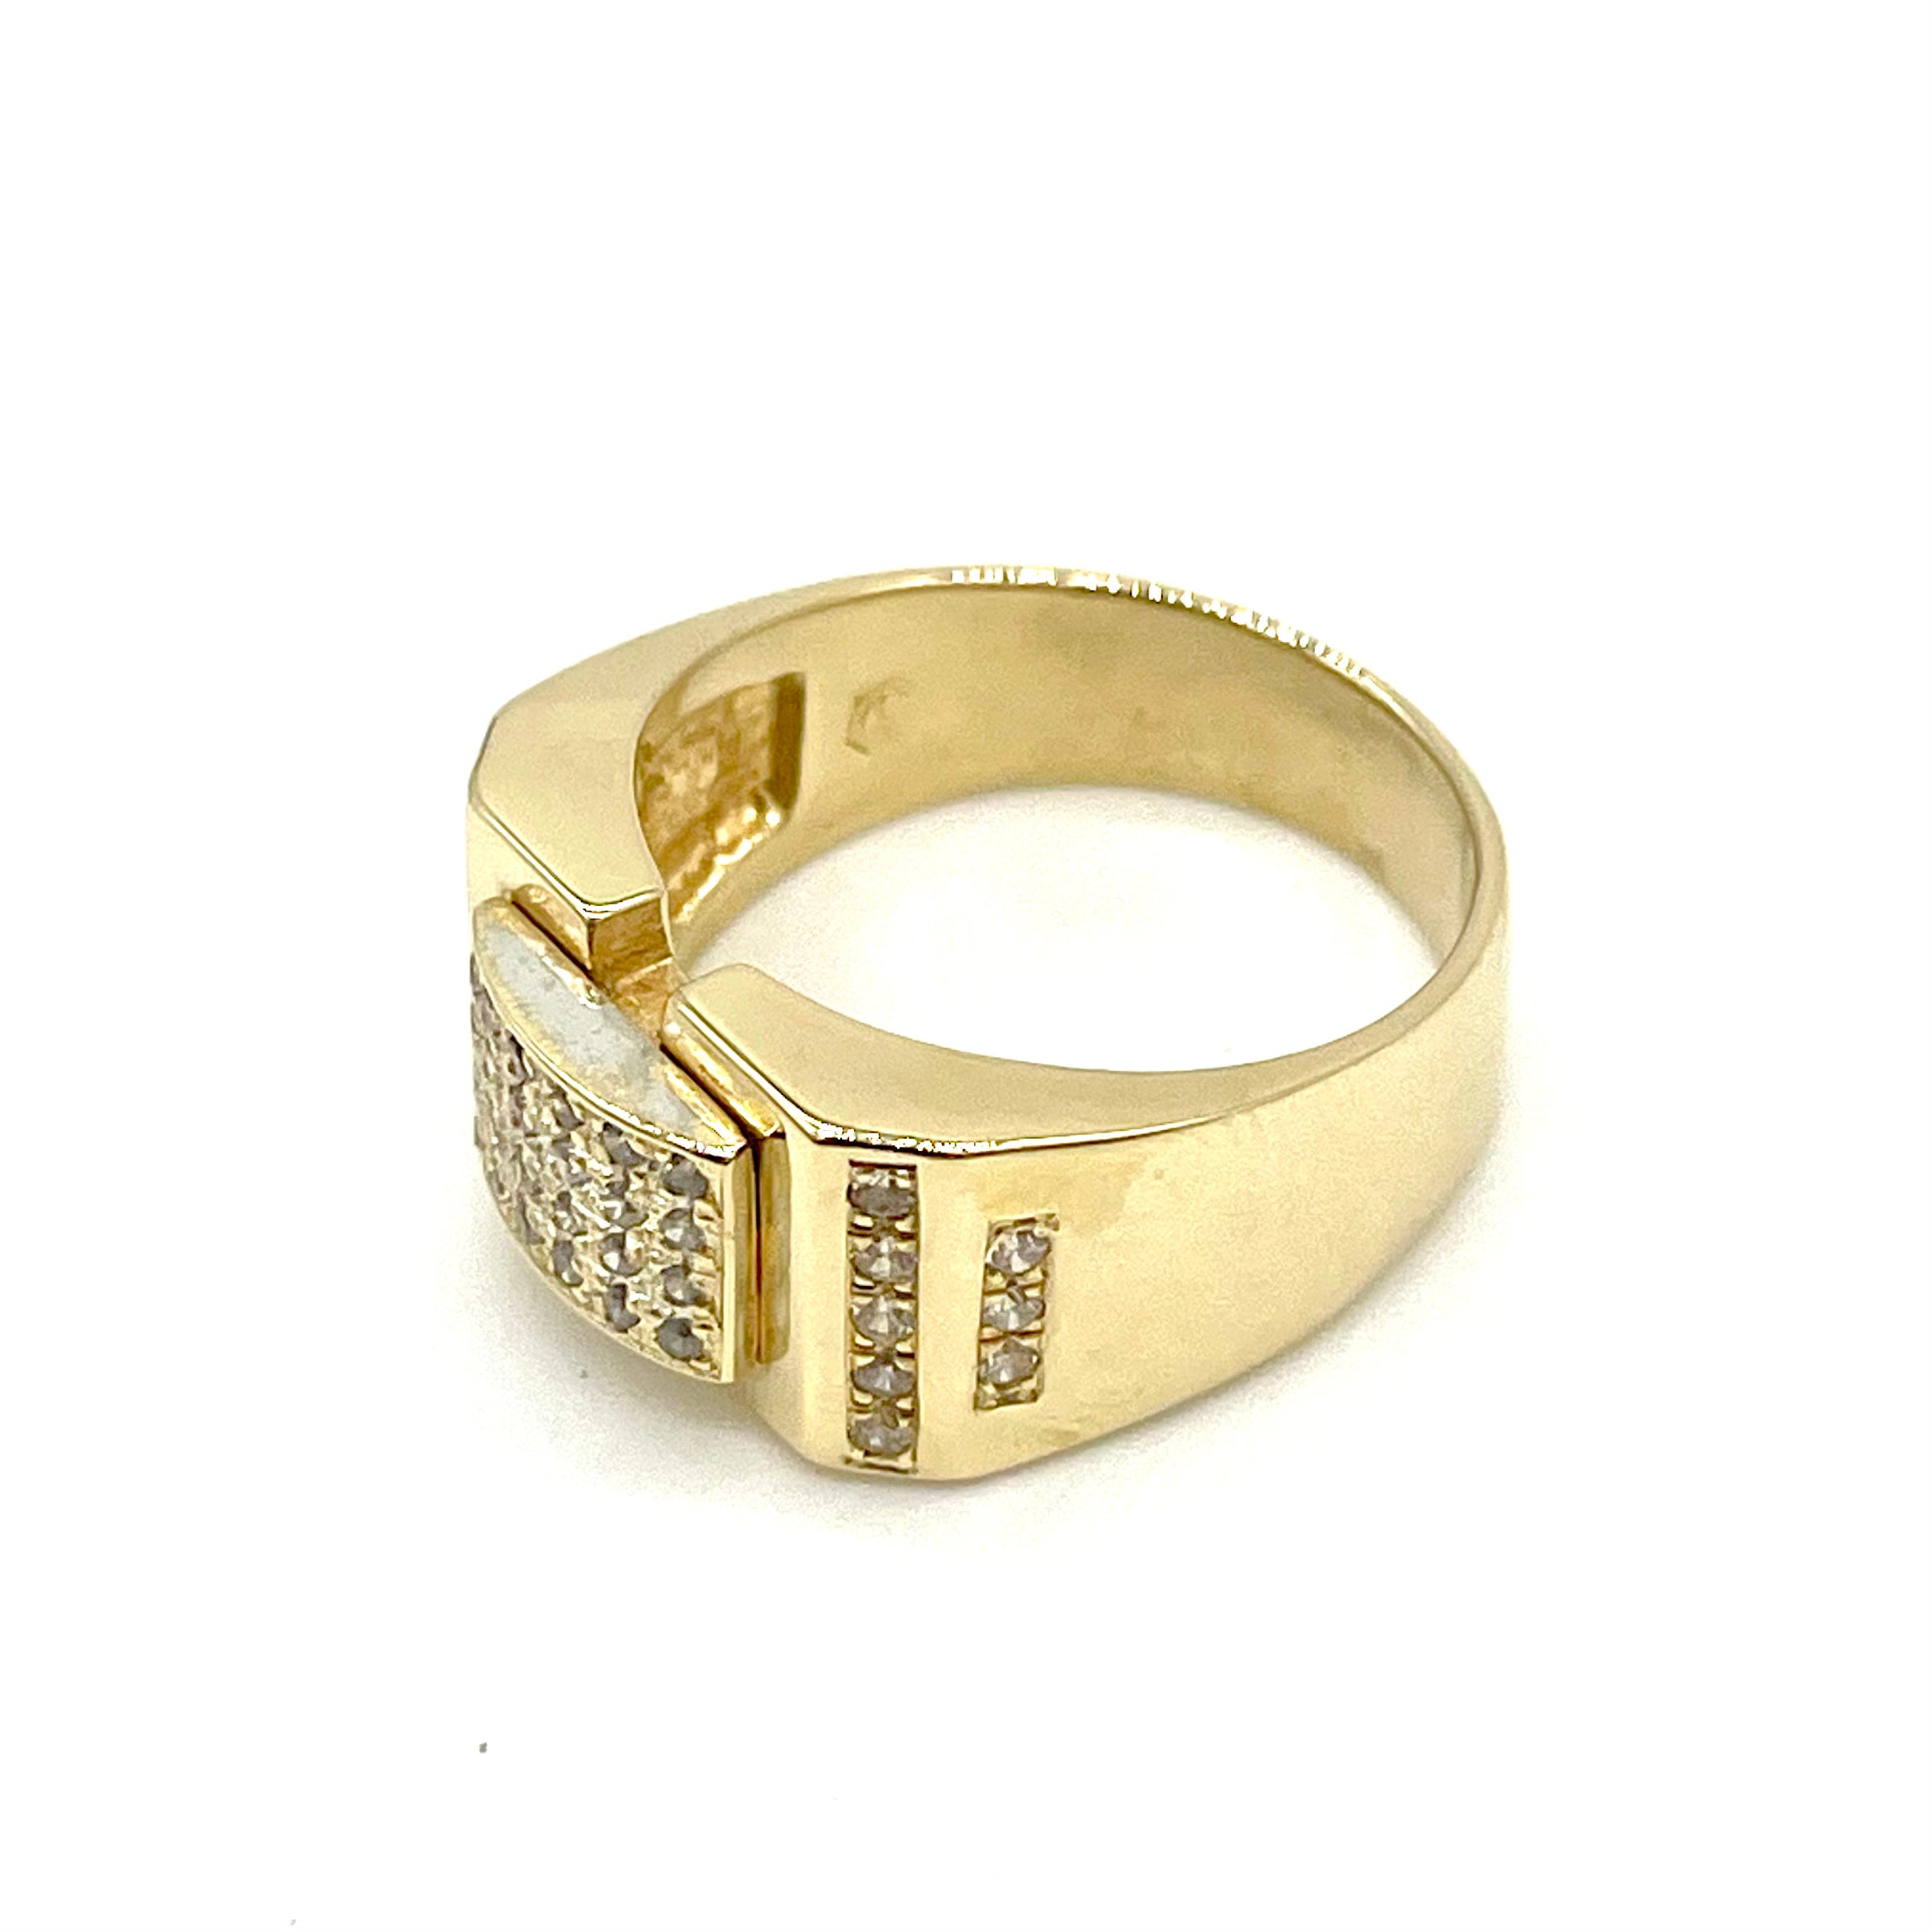 18k Gold & Diamond Square Cluster Ring